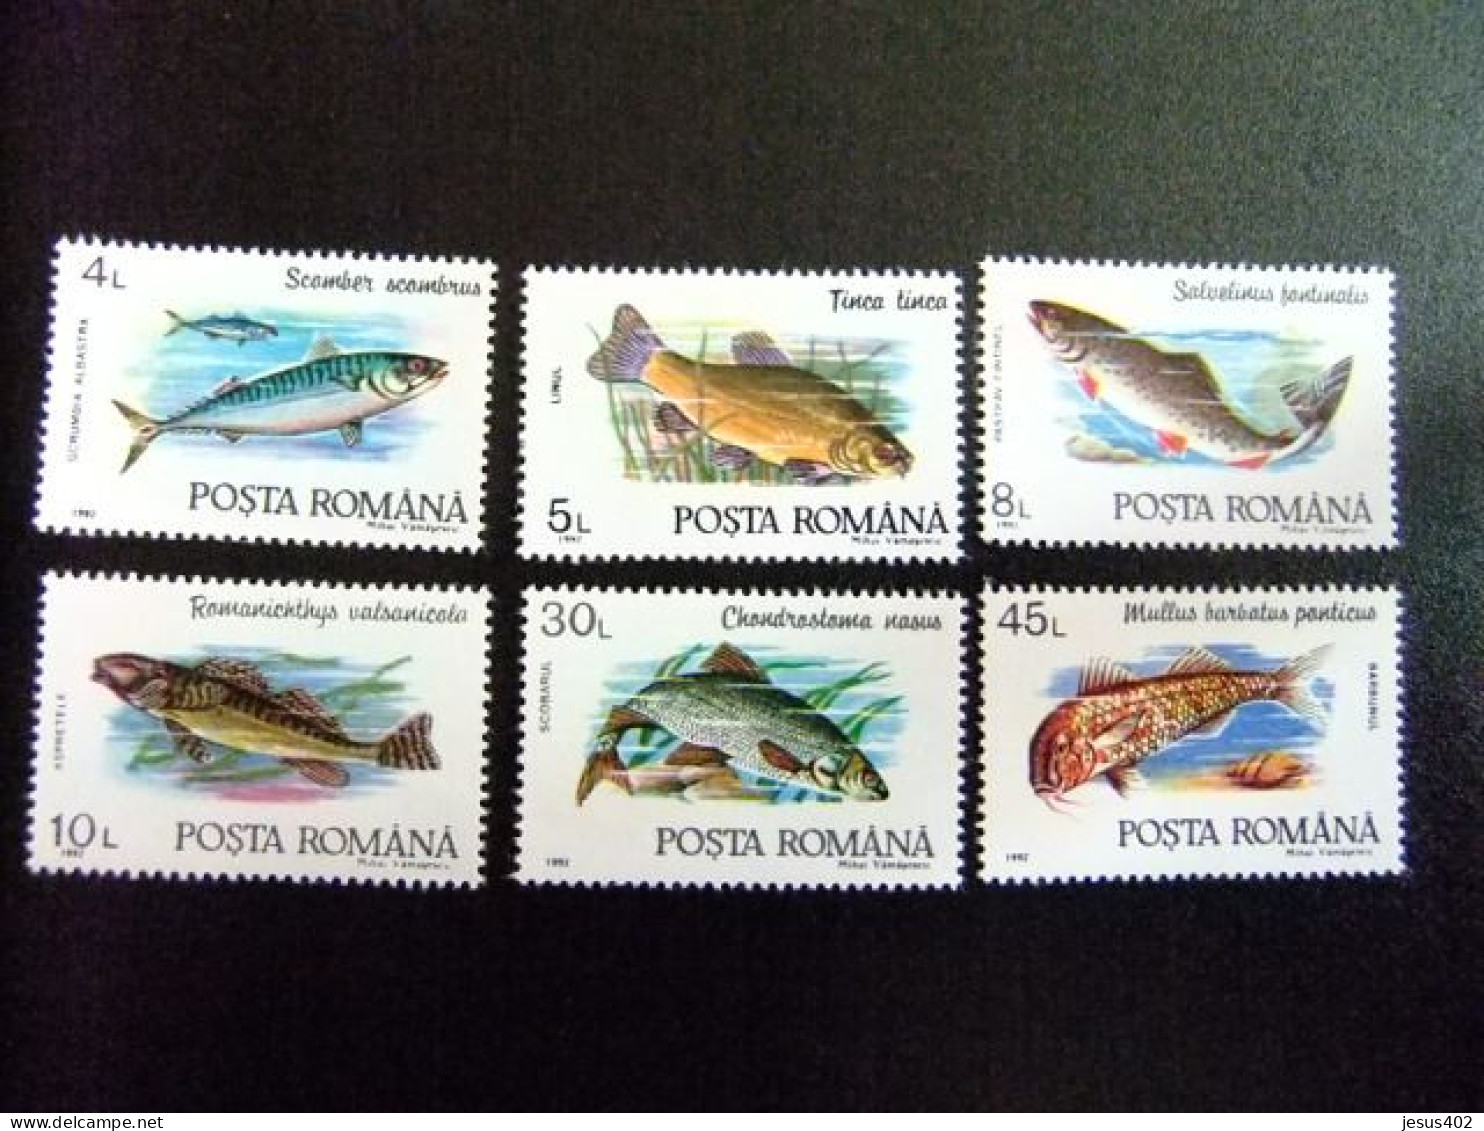 111 RUMANIA  / POSTA ROMANA 1992 / FAUNA MARINA  PECES FISH / YVERT  3991 / 3996 ** MNH - Ungebraucht